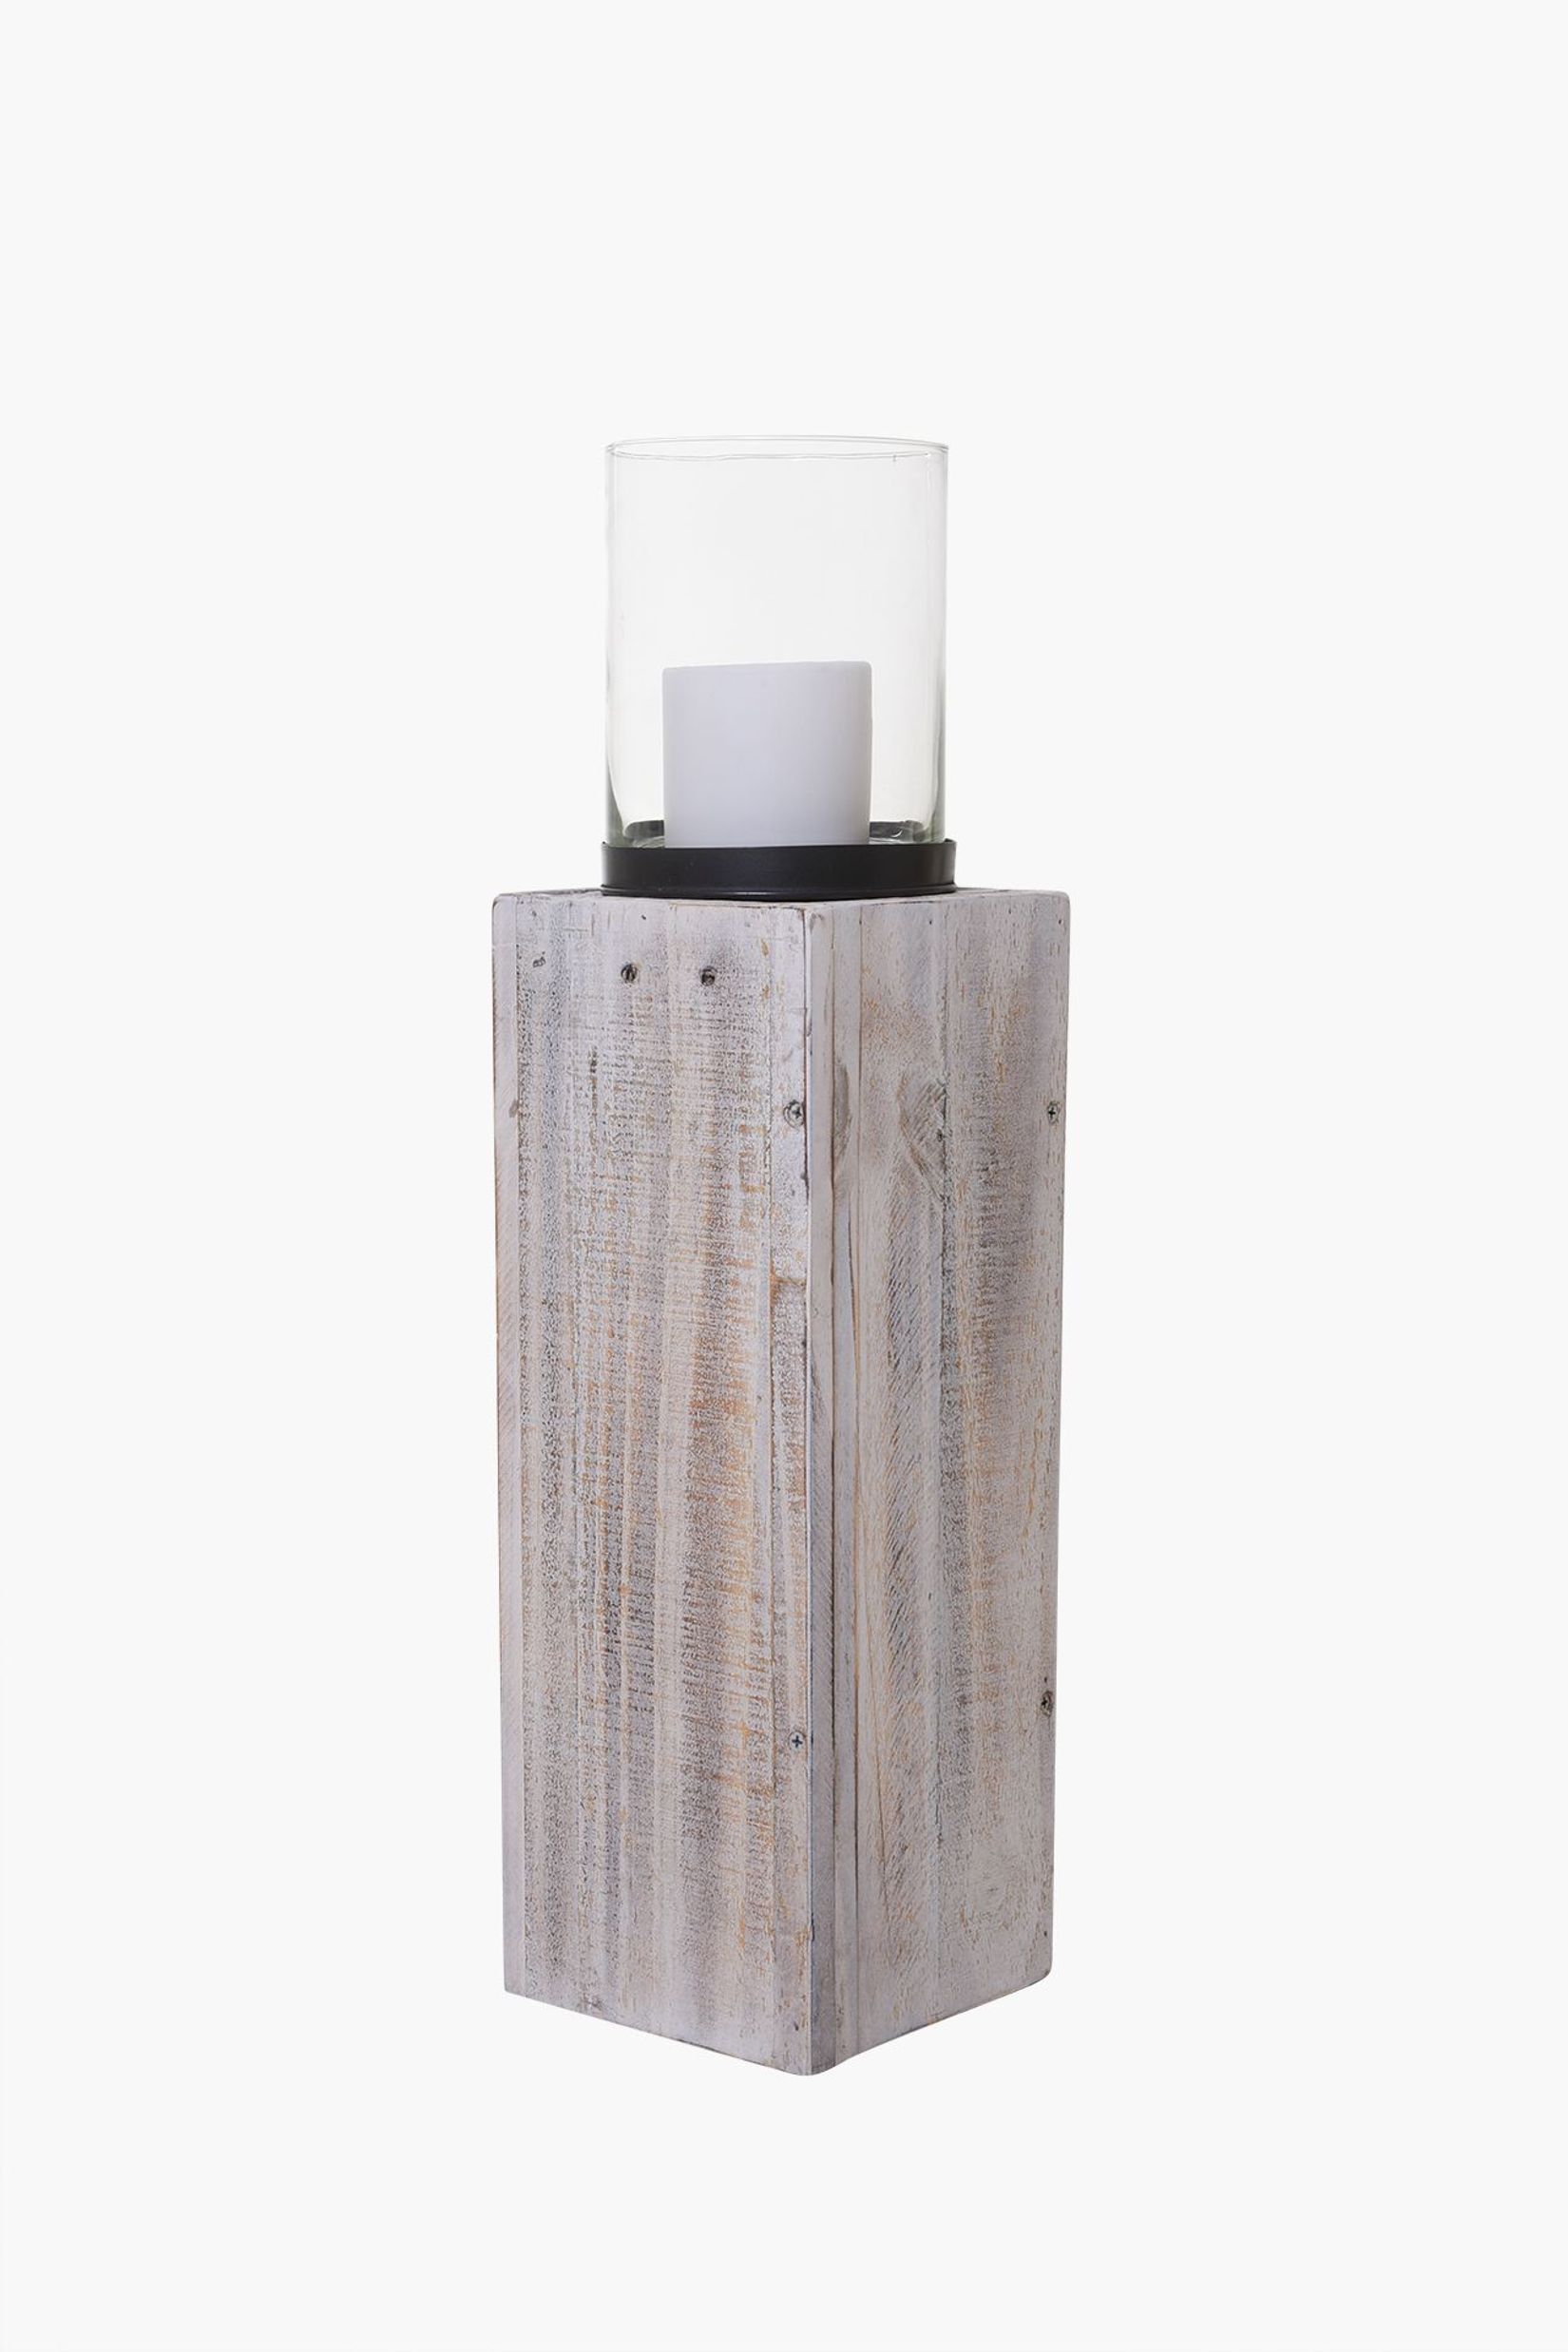 Windlicht Säule Kerzenhalter Recycling Holz "Lumira", Shabby Chic Weiß